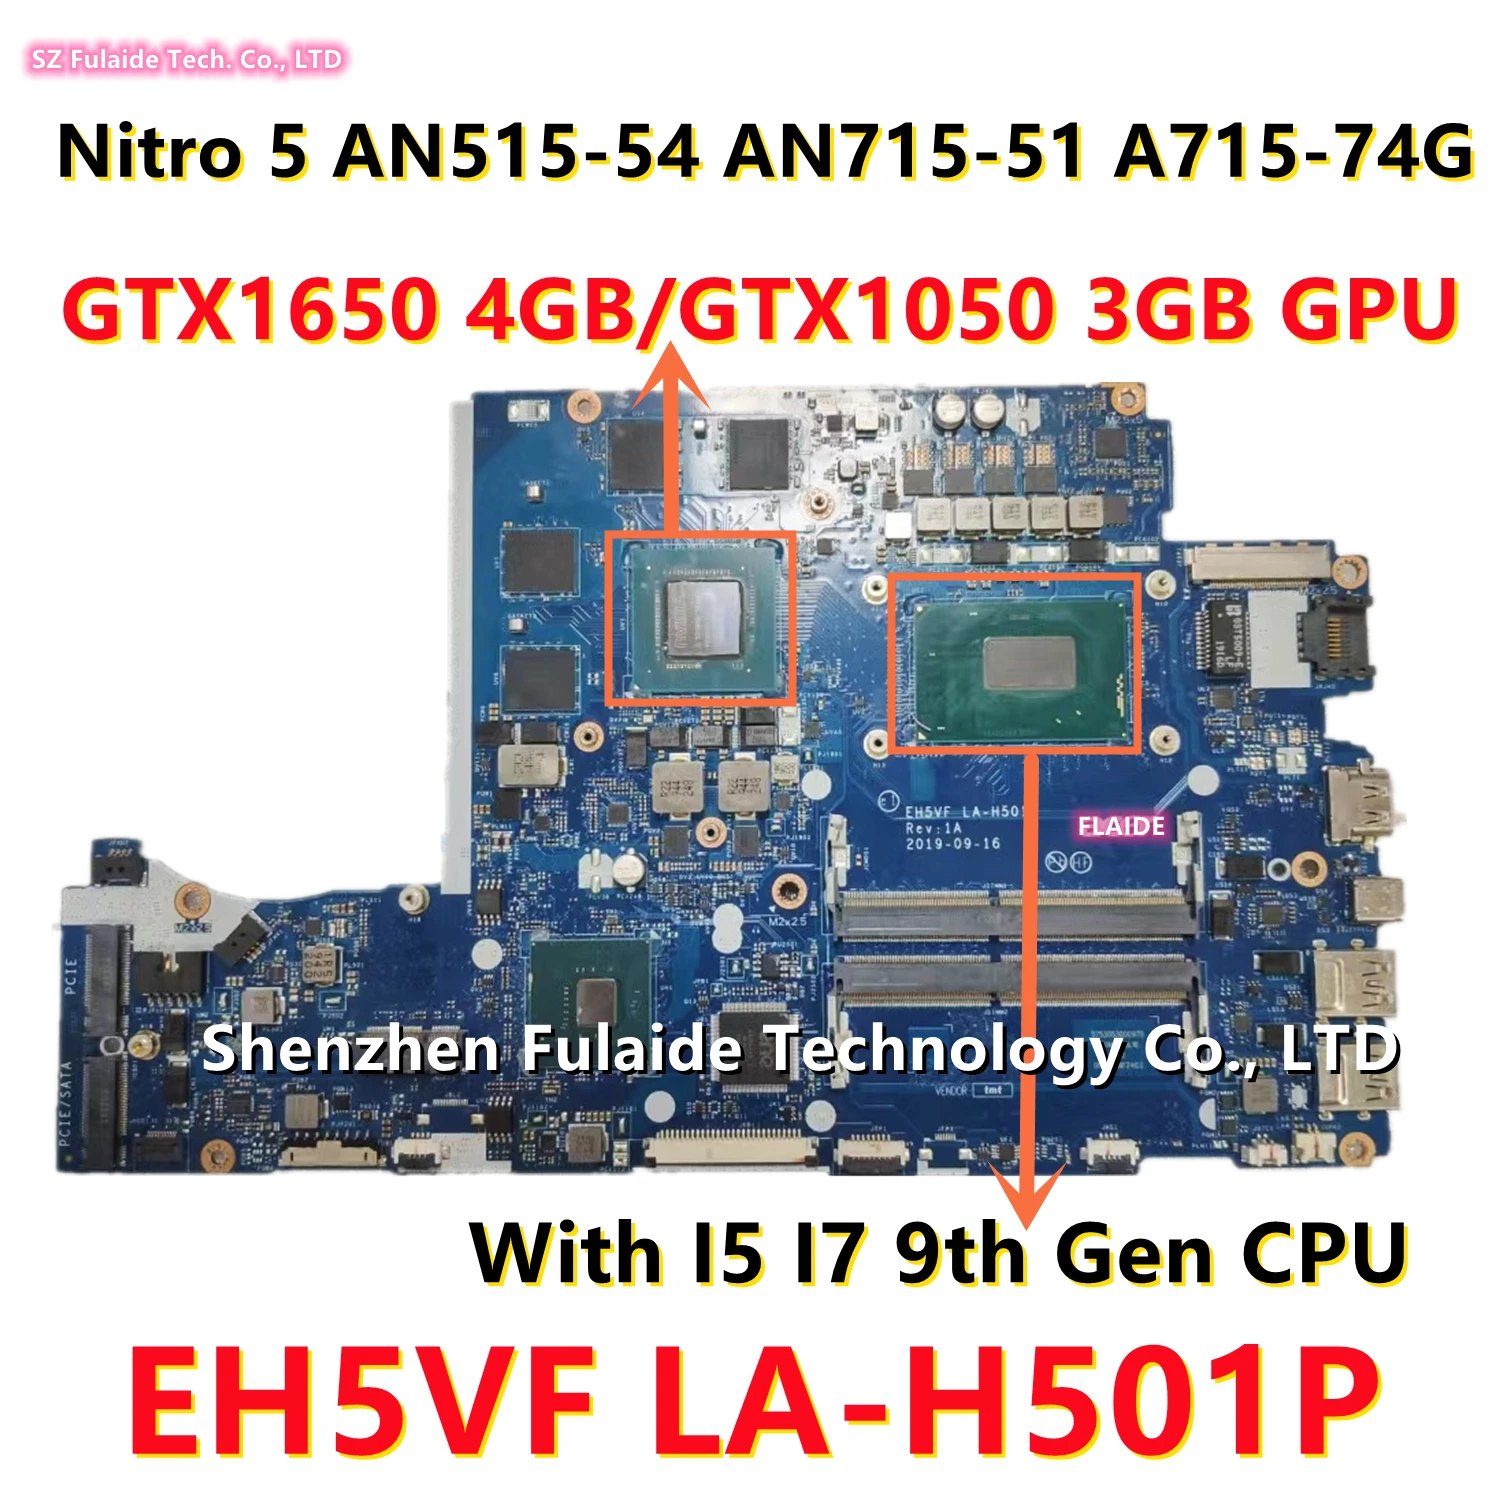 

EH5VF LA-H501P For Acer Nitro 5 AN515-54 AN715-51 A715-74G Laptop Motherboard With i5 i7 9th Gen CPU GTX1650 4GB/GTX1050 3GB GPU